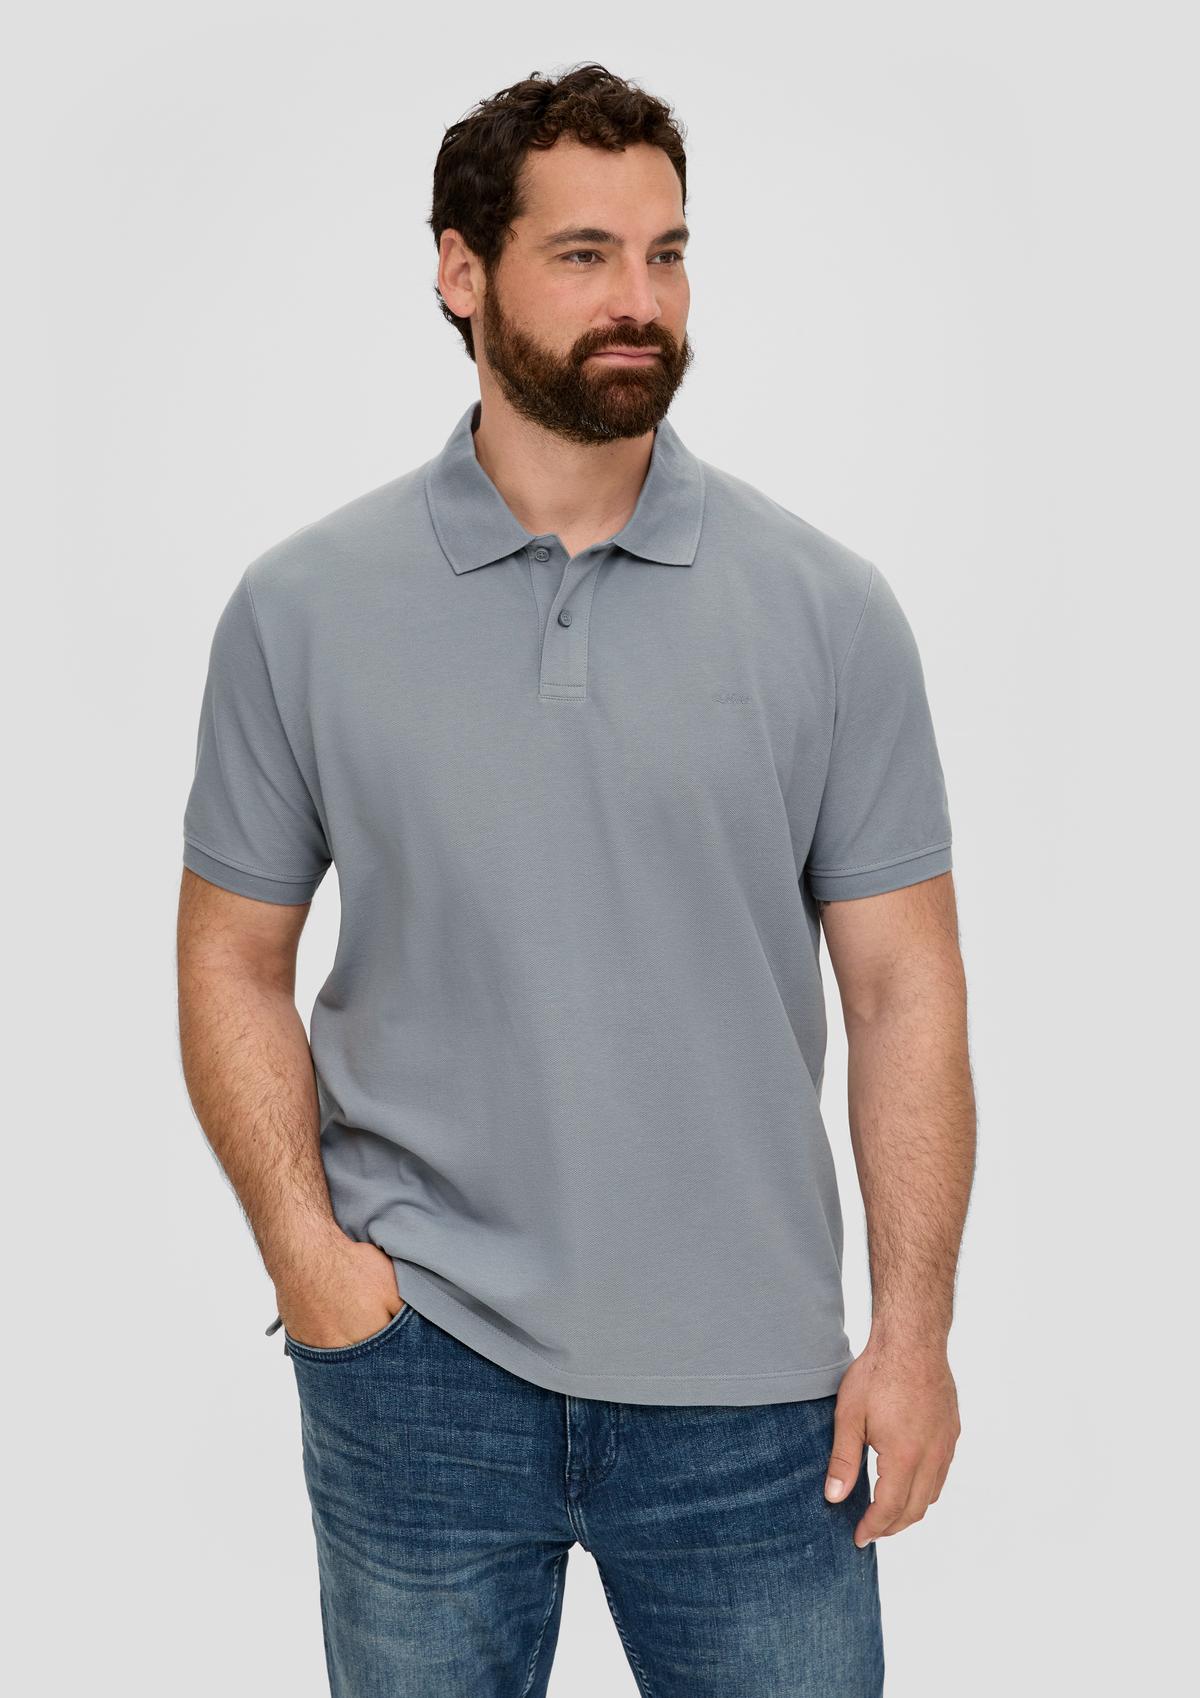 - print Polo navy minimalist a with shirt